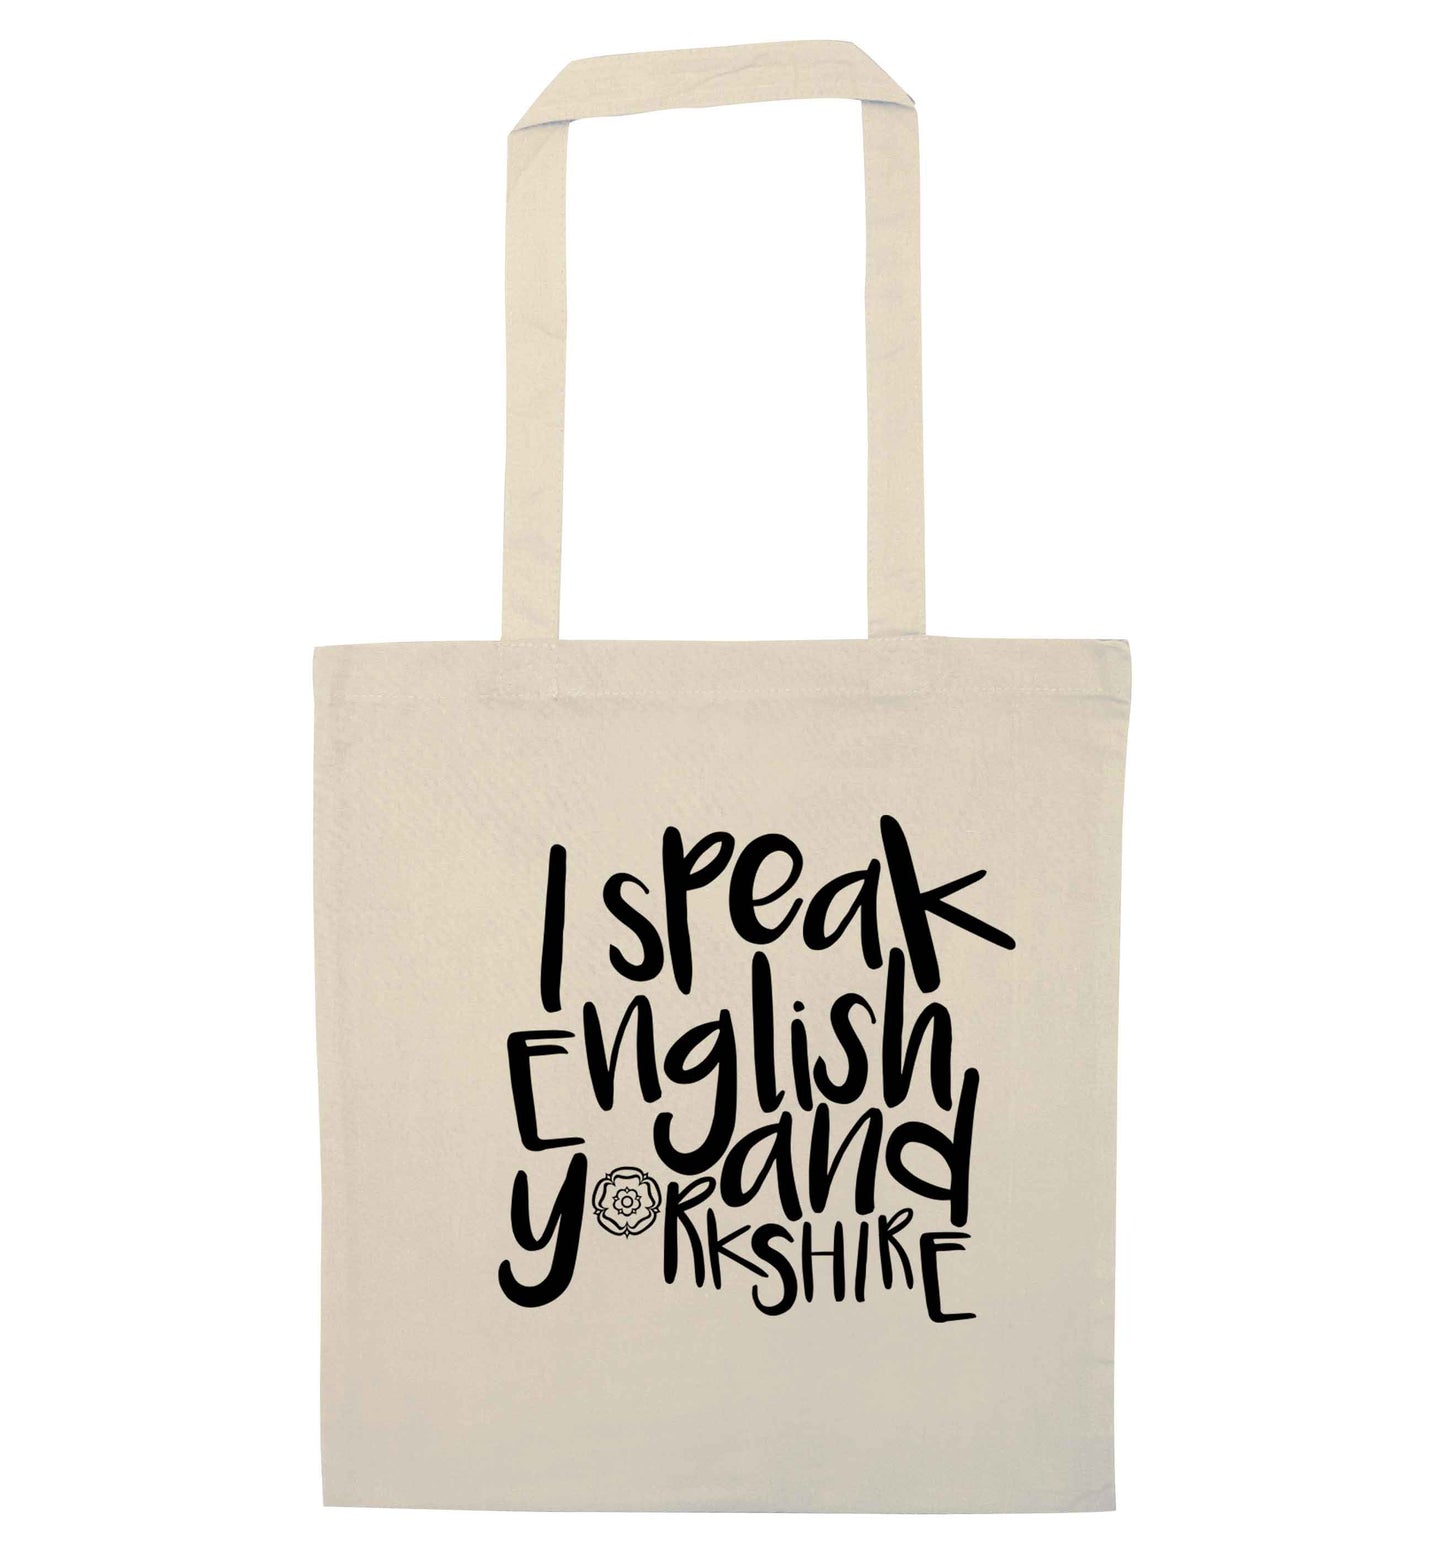 I speak English and Yorkshire natural tote bag